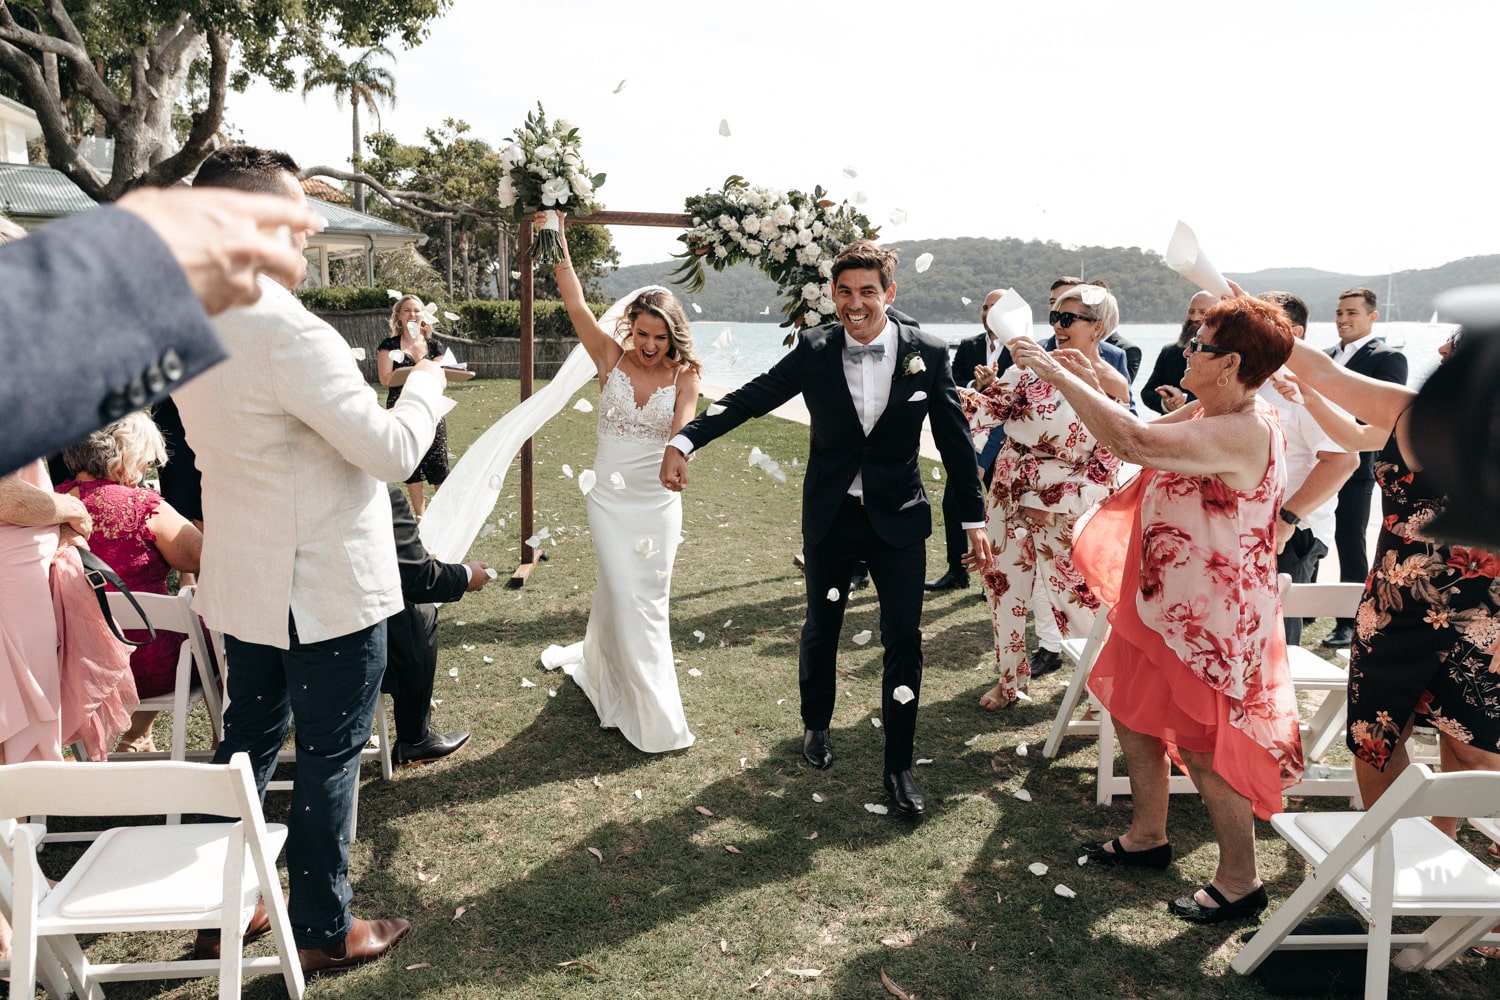 matt and jacqui walking down the isle - wedding photography style - palm beach wedding